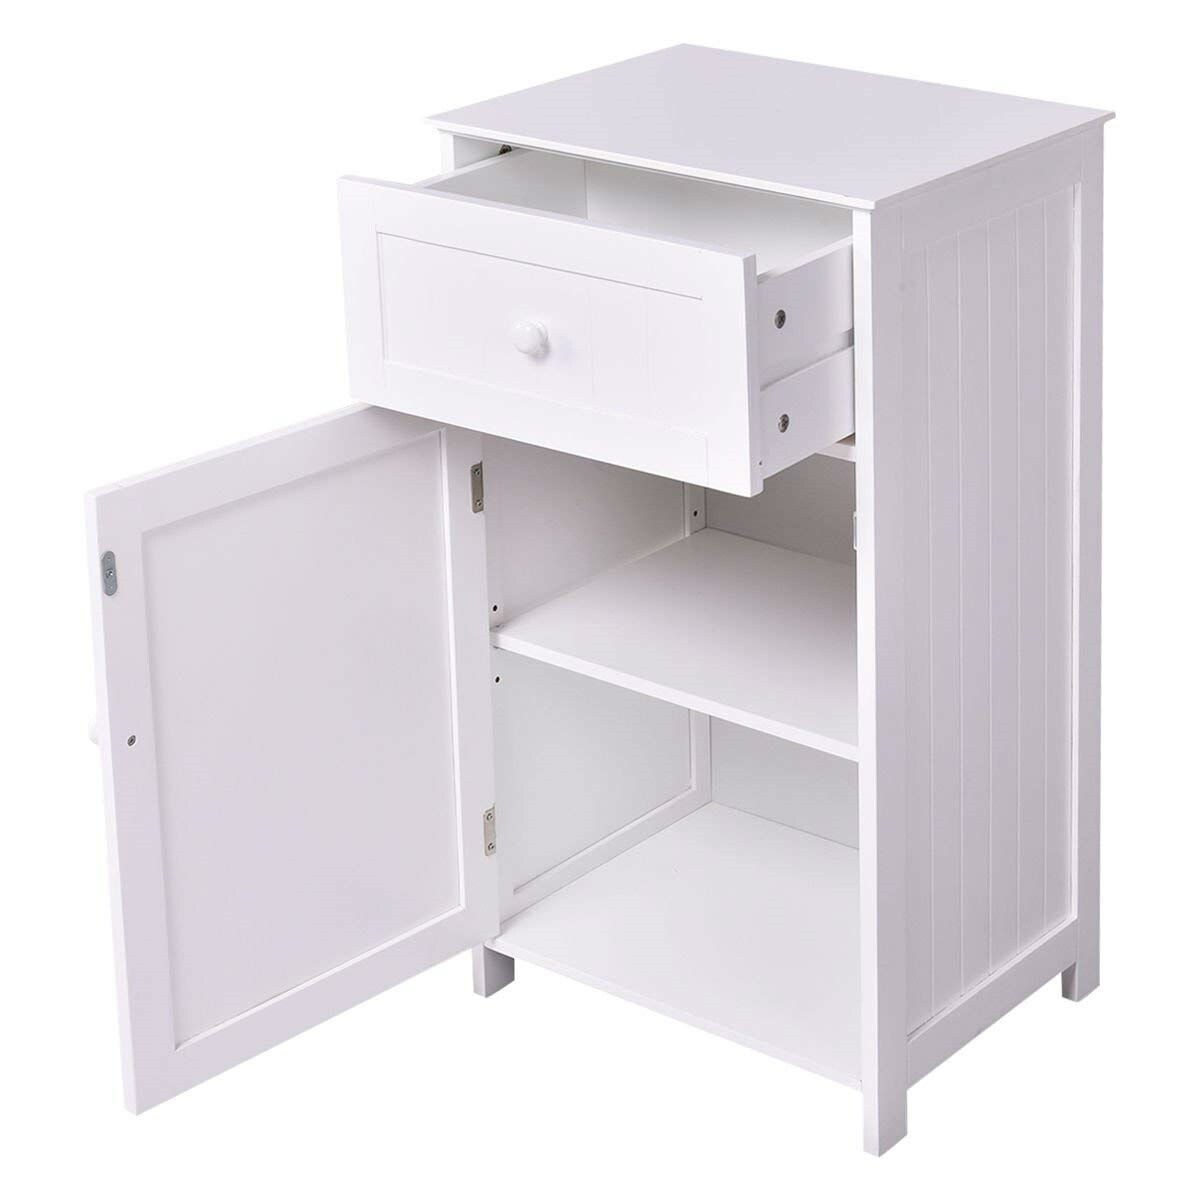 White Wood Bathroom Storage Floor Cabinet with Water Resistant